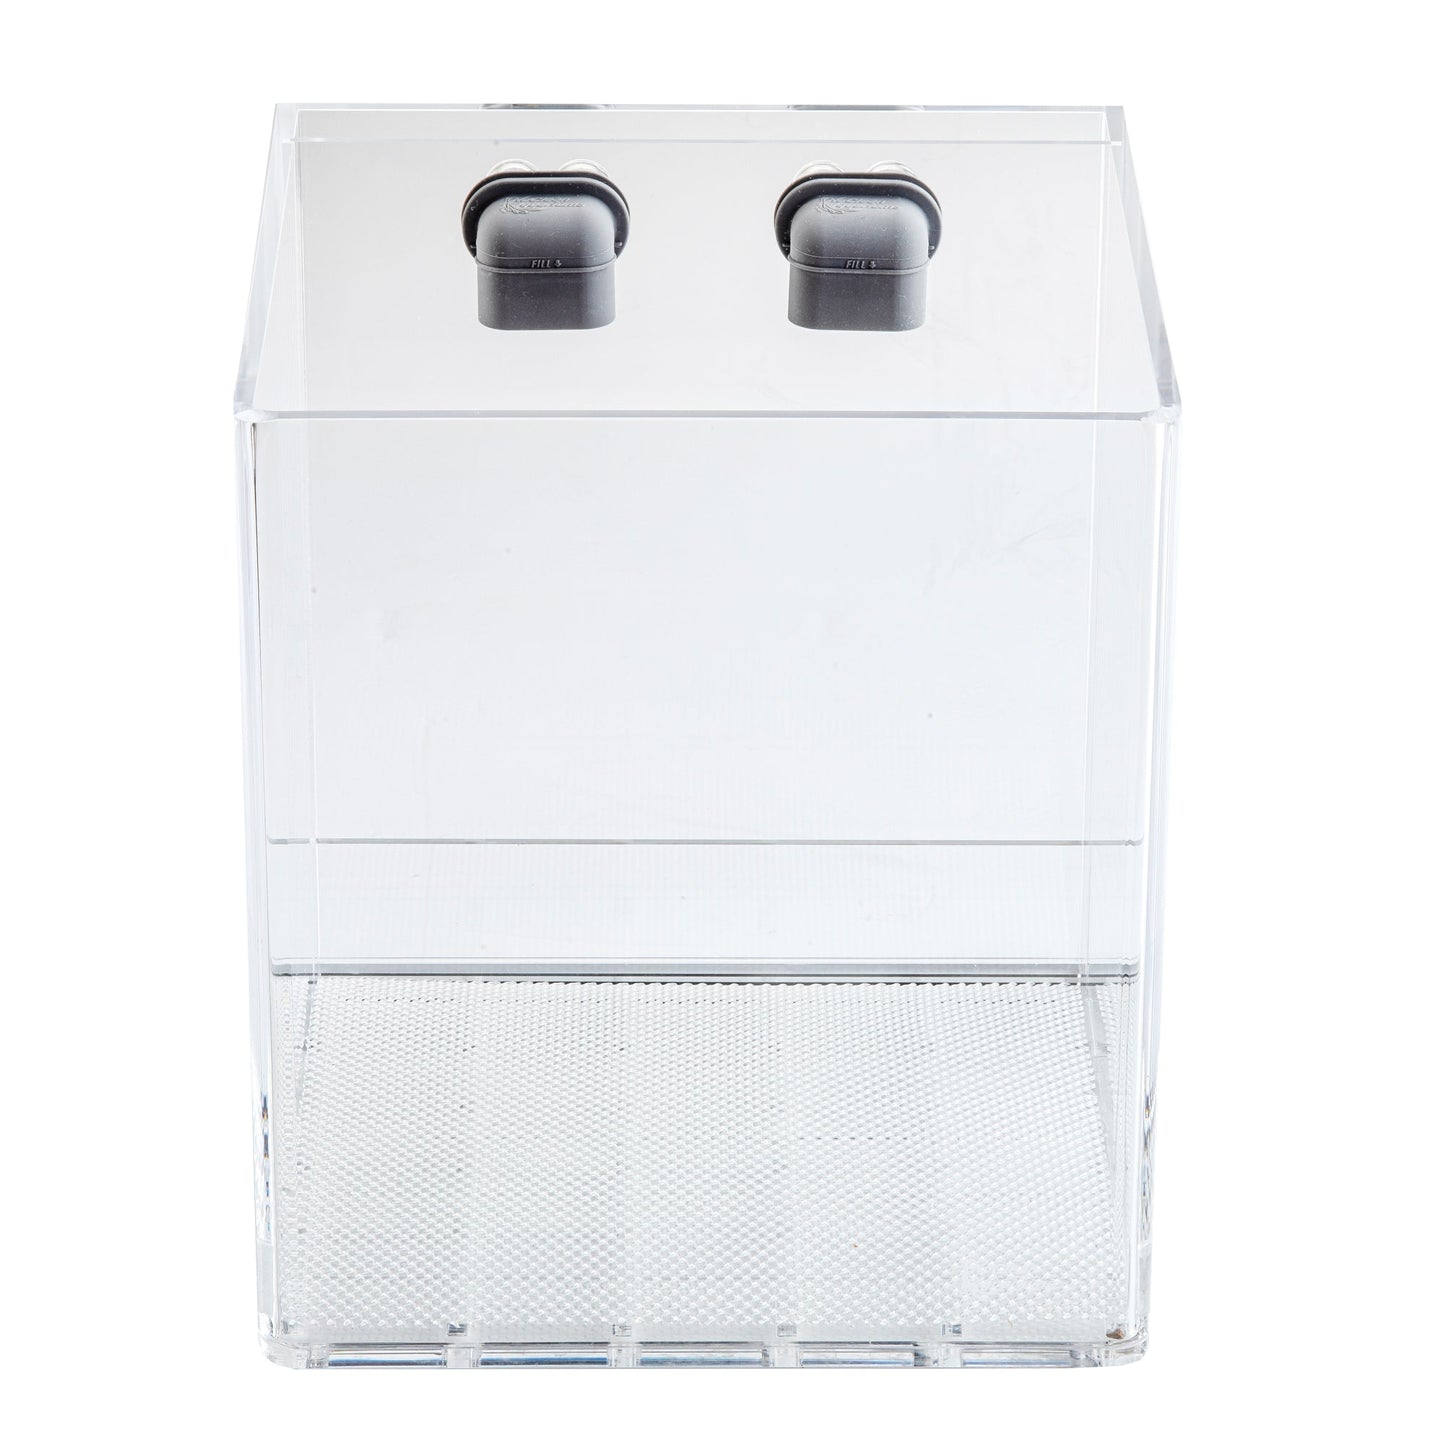 3 Gallon Cube Self-Cleaning Aquarium KIT | Lid | Waterfall Basin | Dazzle LED | Air Pump